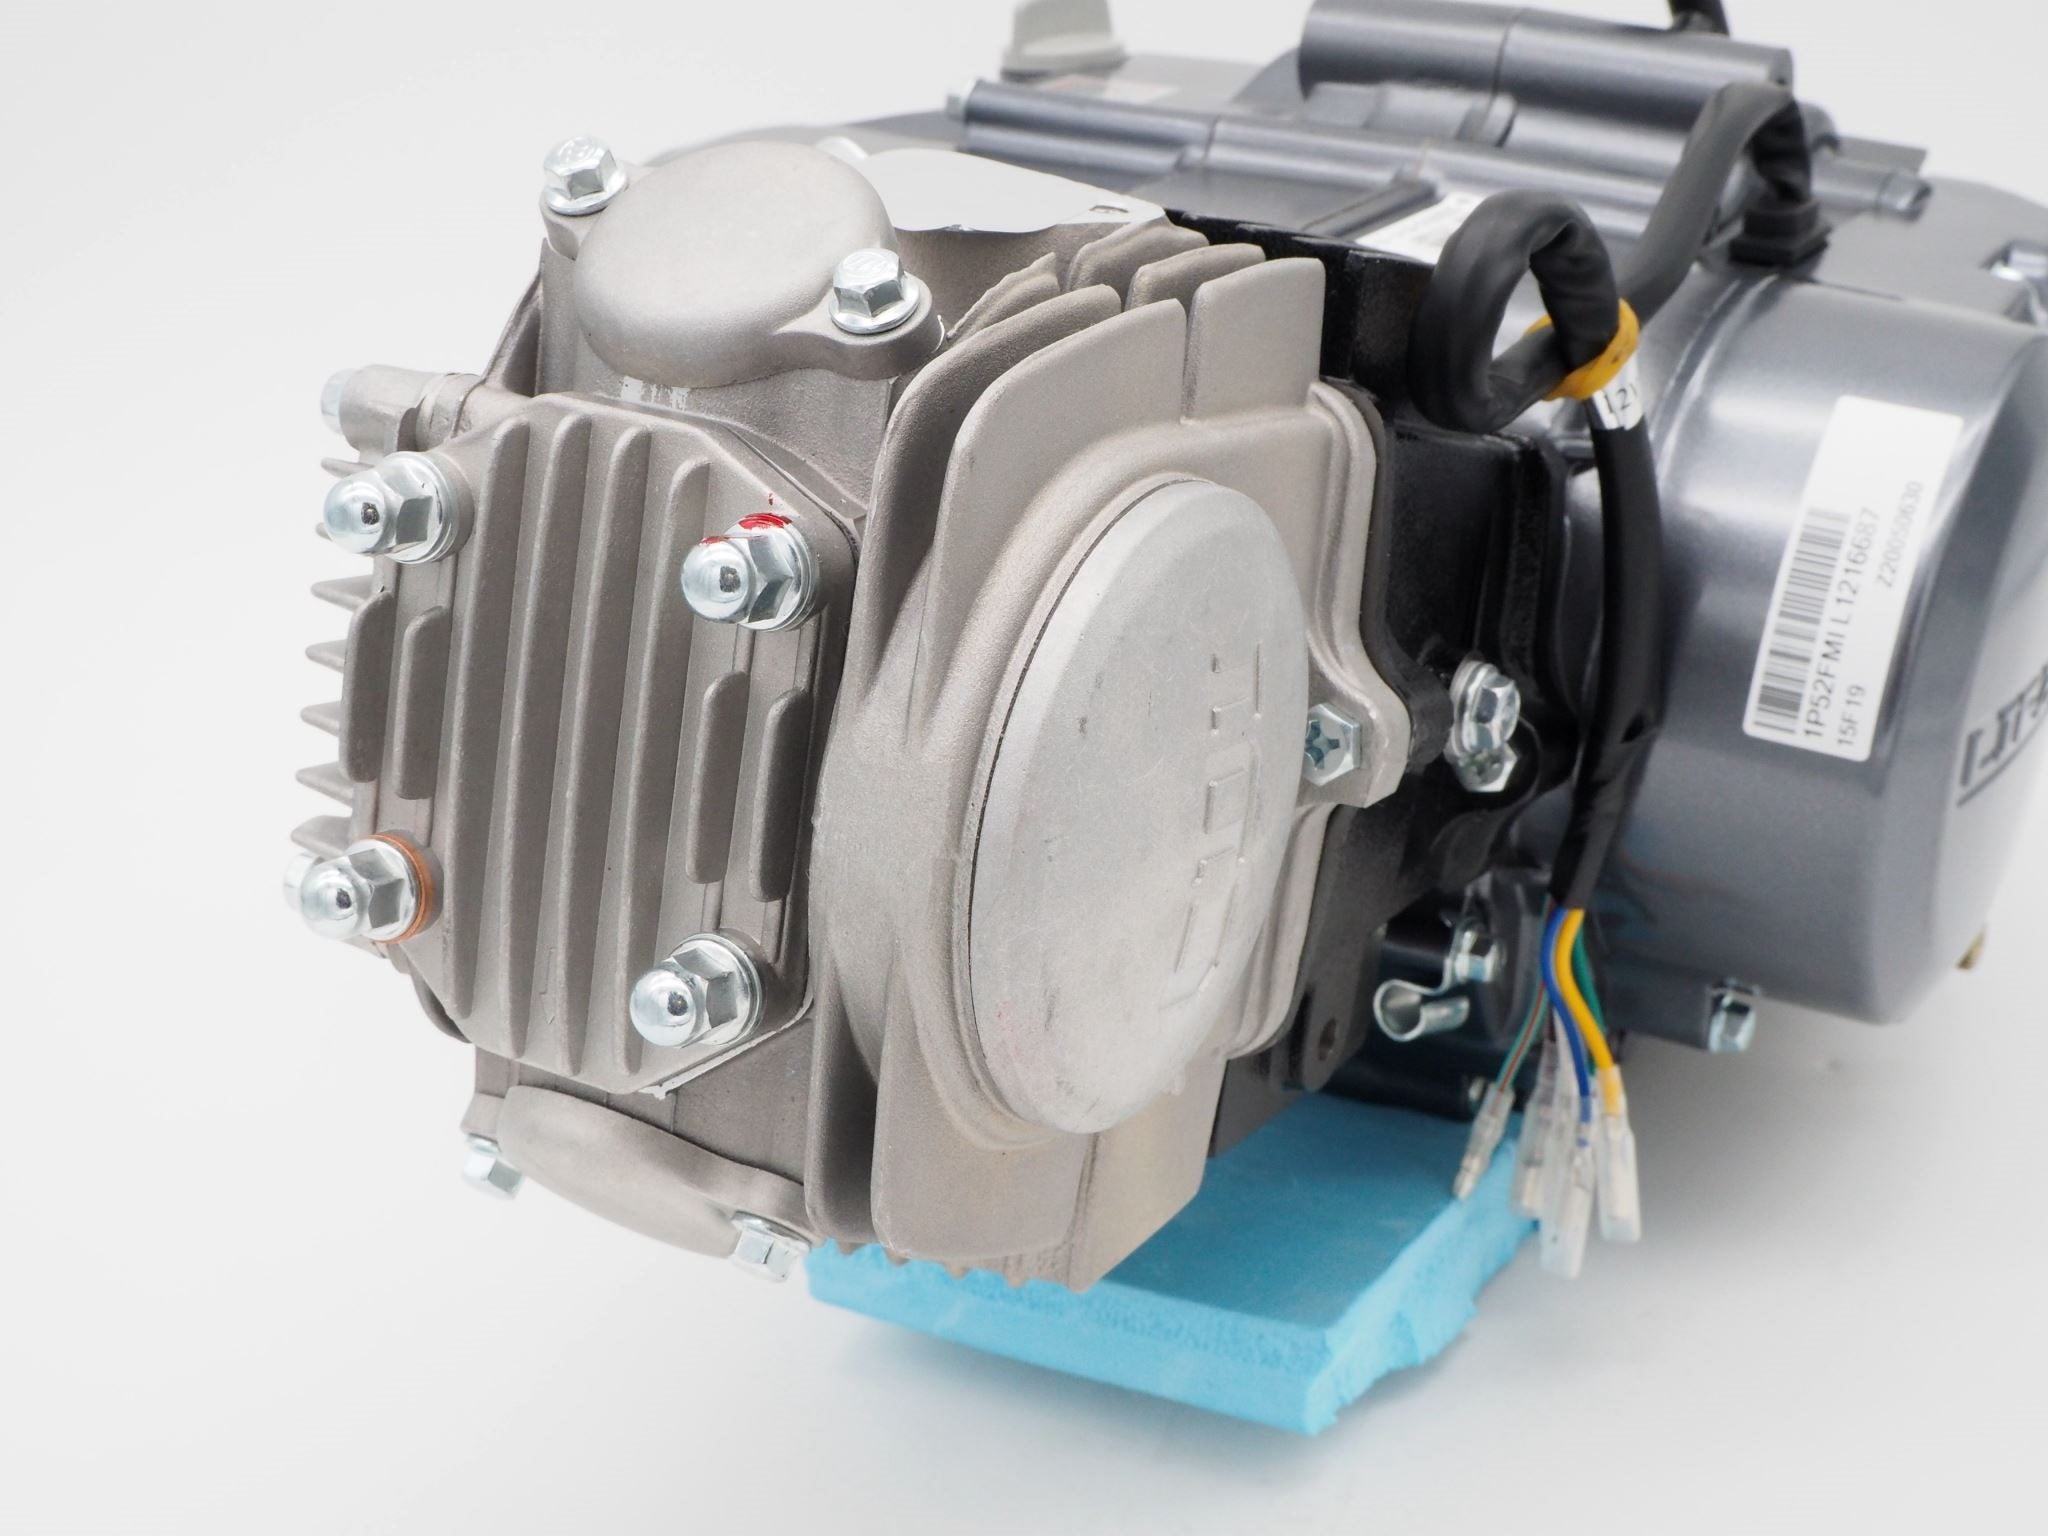 TDPRO Full Set of Lifan 125cc Engine Semi-Auto 4 Stroke Motor with